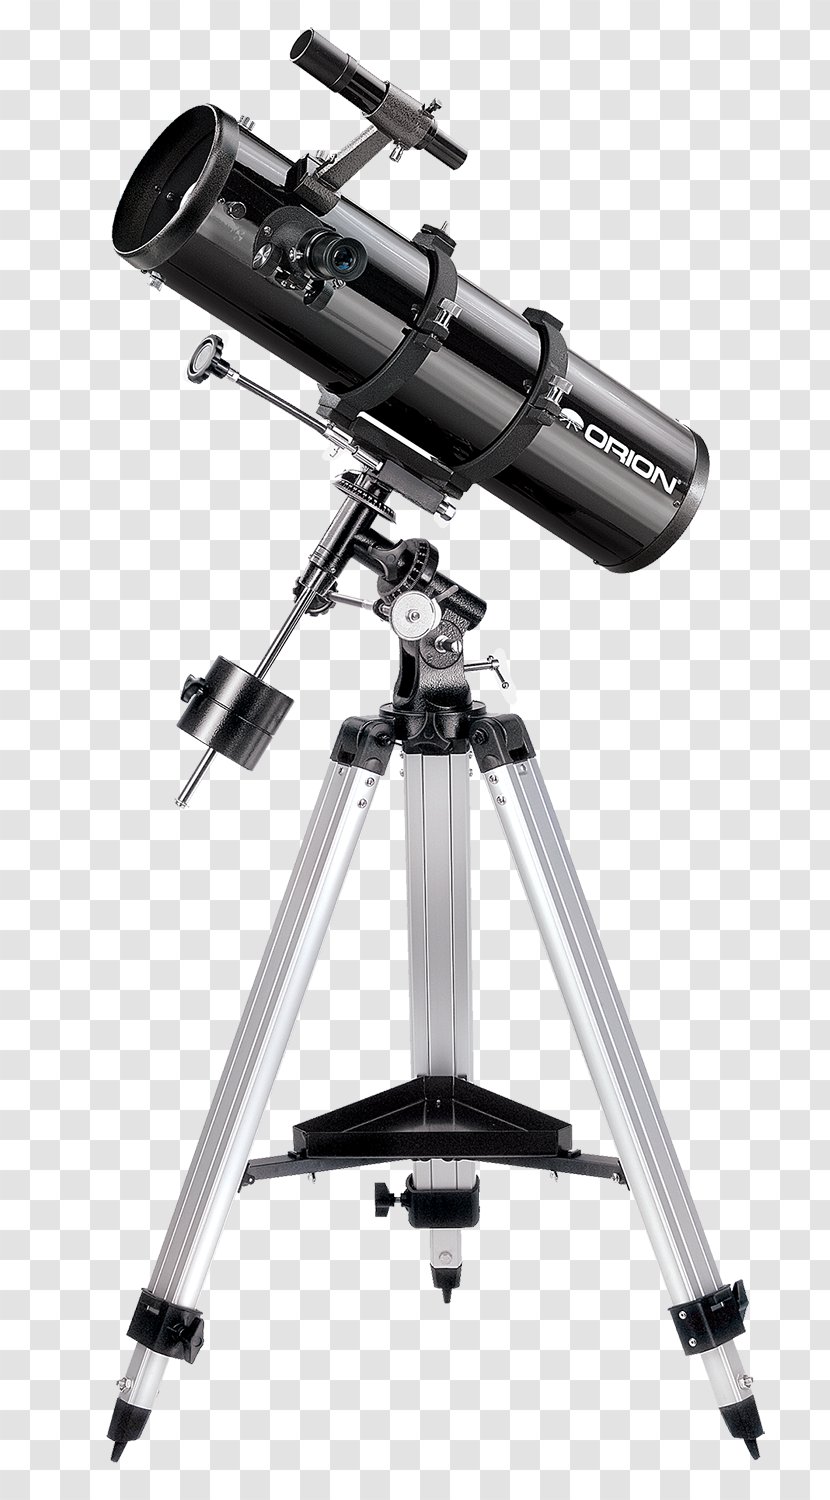 orion telescopes & binoculars